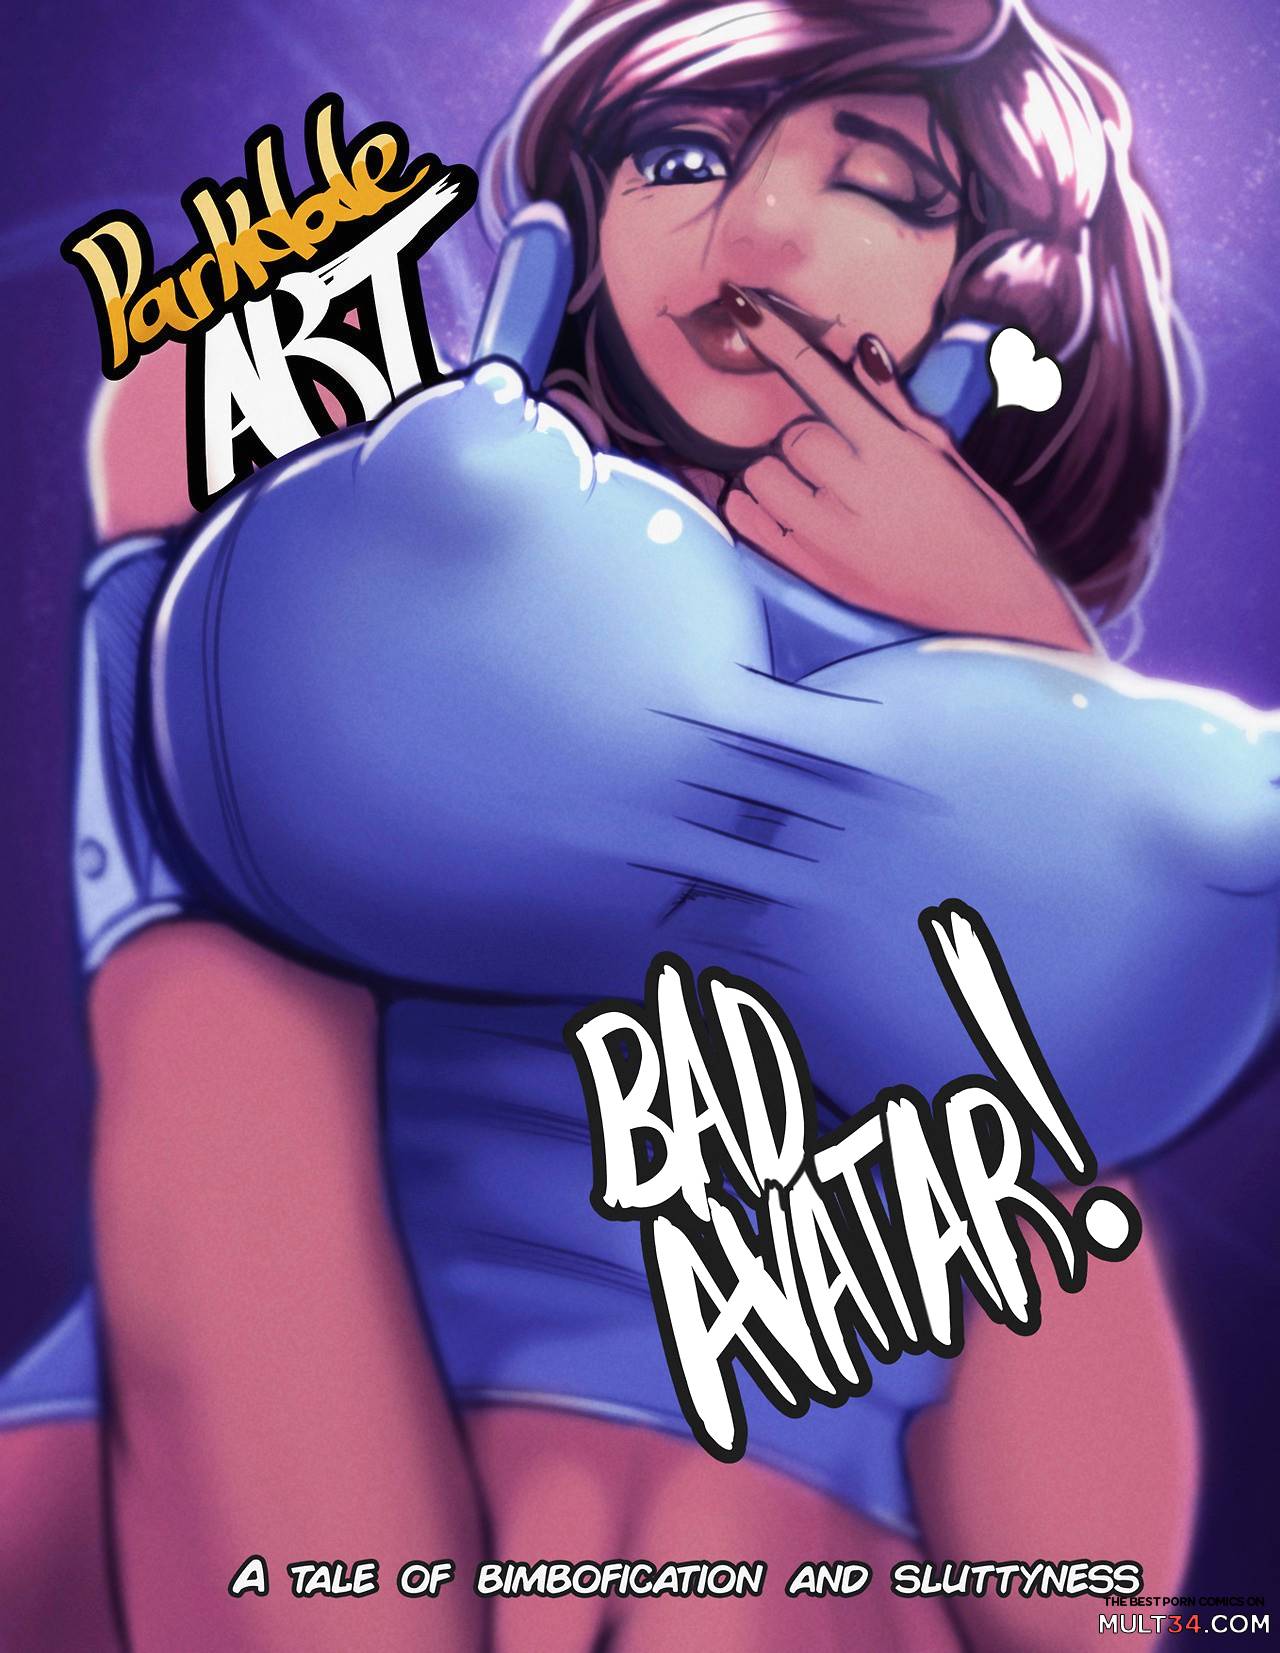 Extreme Cartoon Sex Avatar - Bad Avatar! porn comic - the best cartoon porn comics, Rule 34 | MULT34